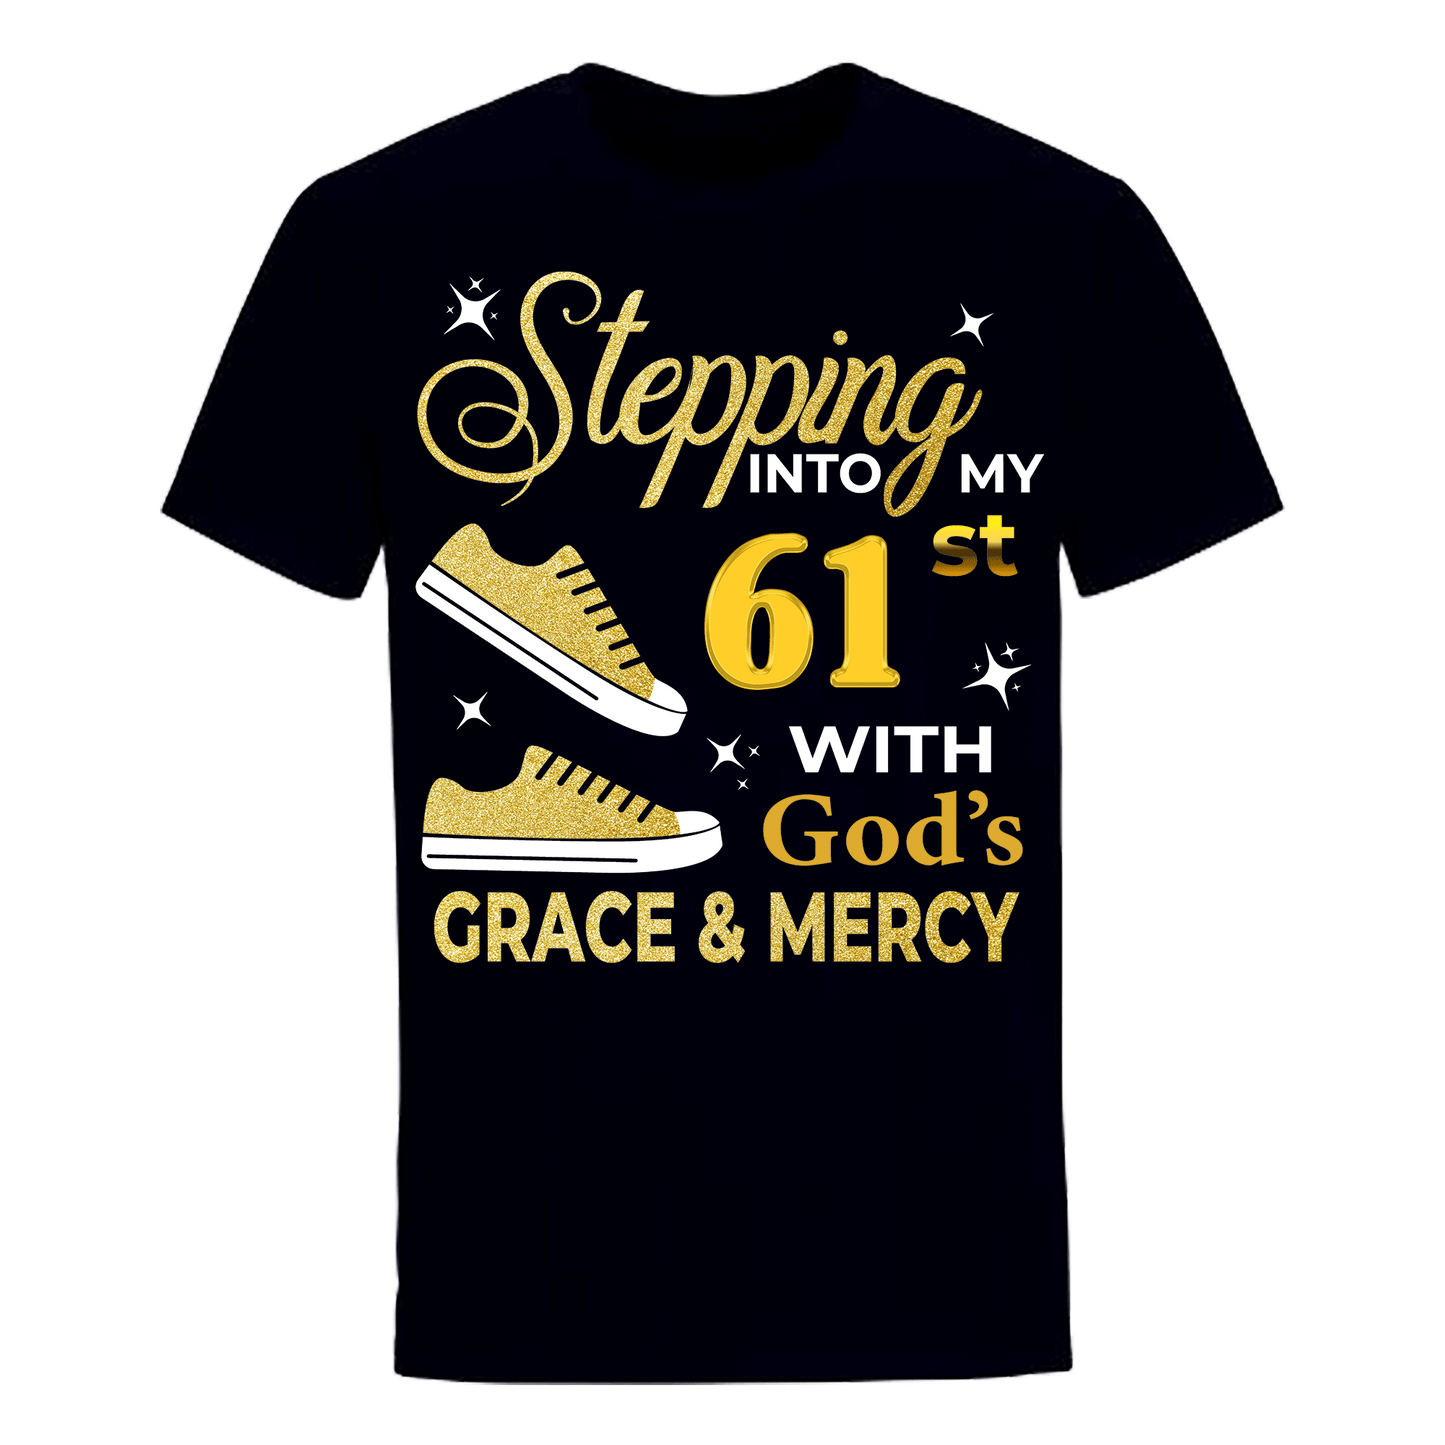 61ST MERCY GRACE UNISEX SHIRT